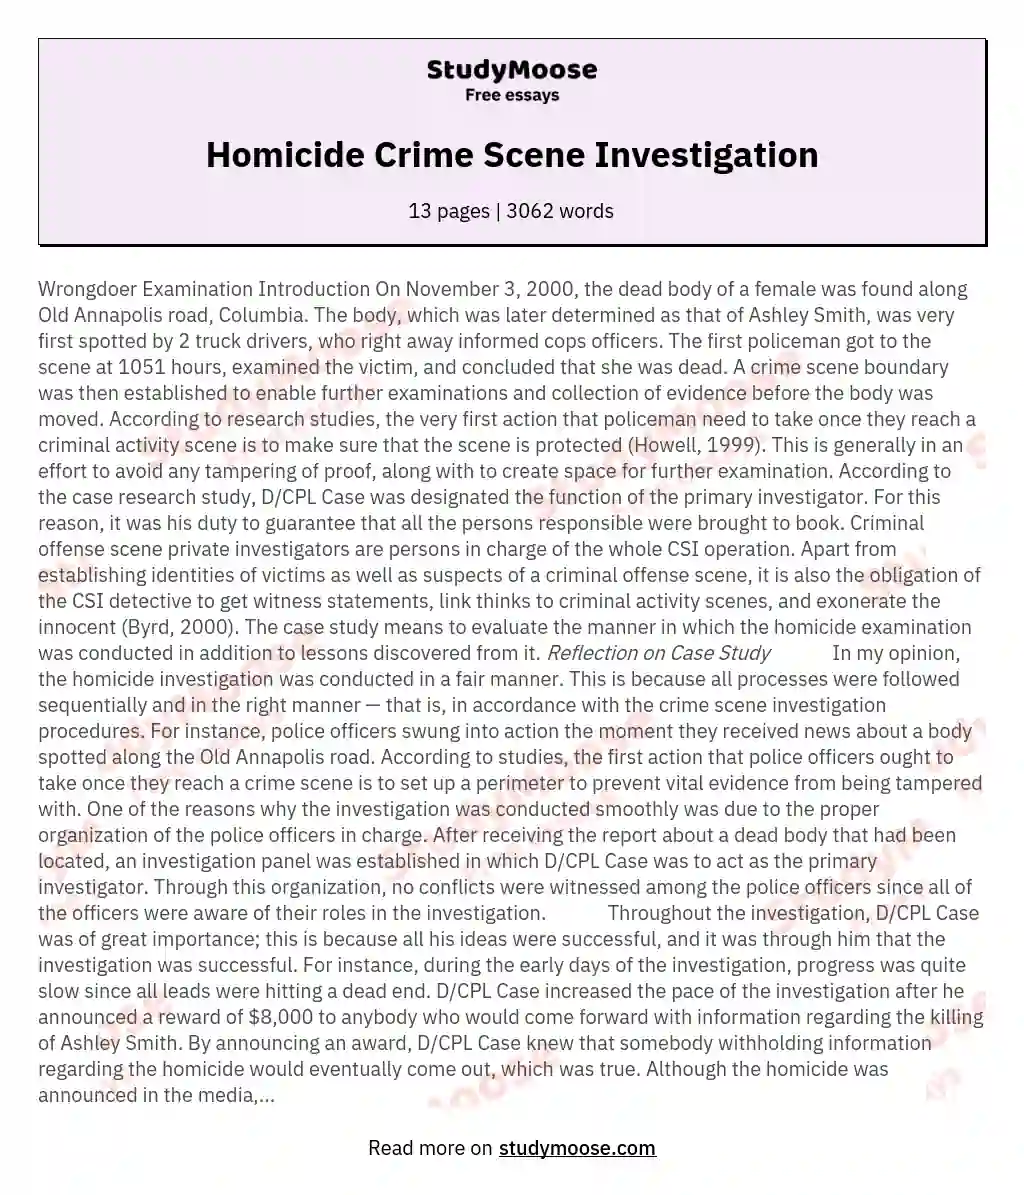 homicide-crime-scene-investigation-free-essay-example